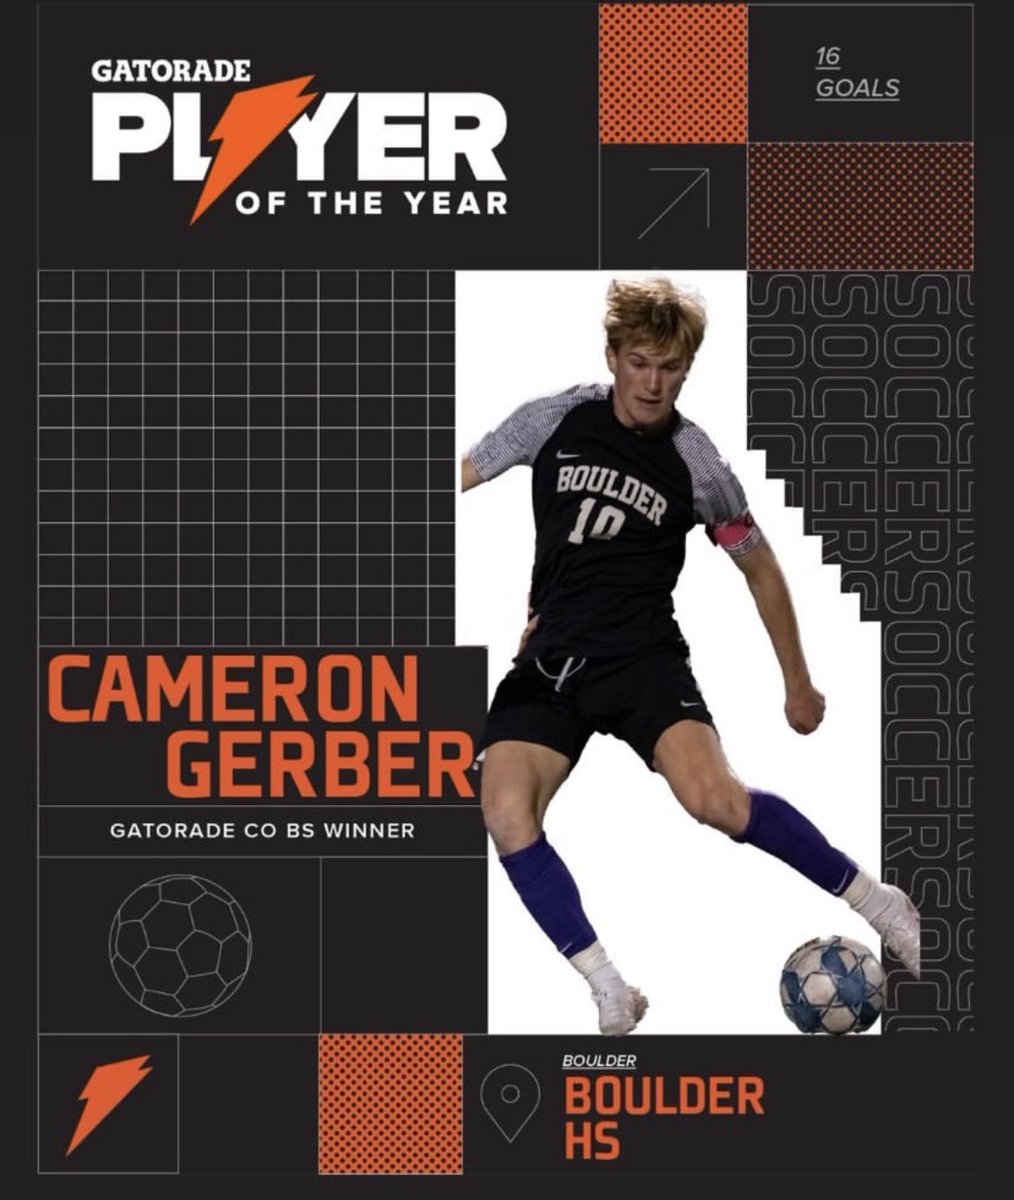 Congrats to incoming freshman Cameron Gerber! 

The Gatorade Player of the Year from Colorado